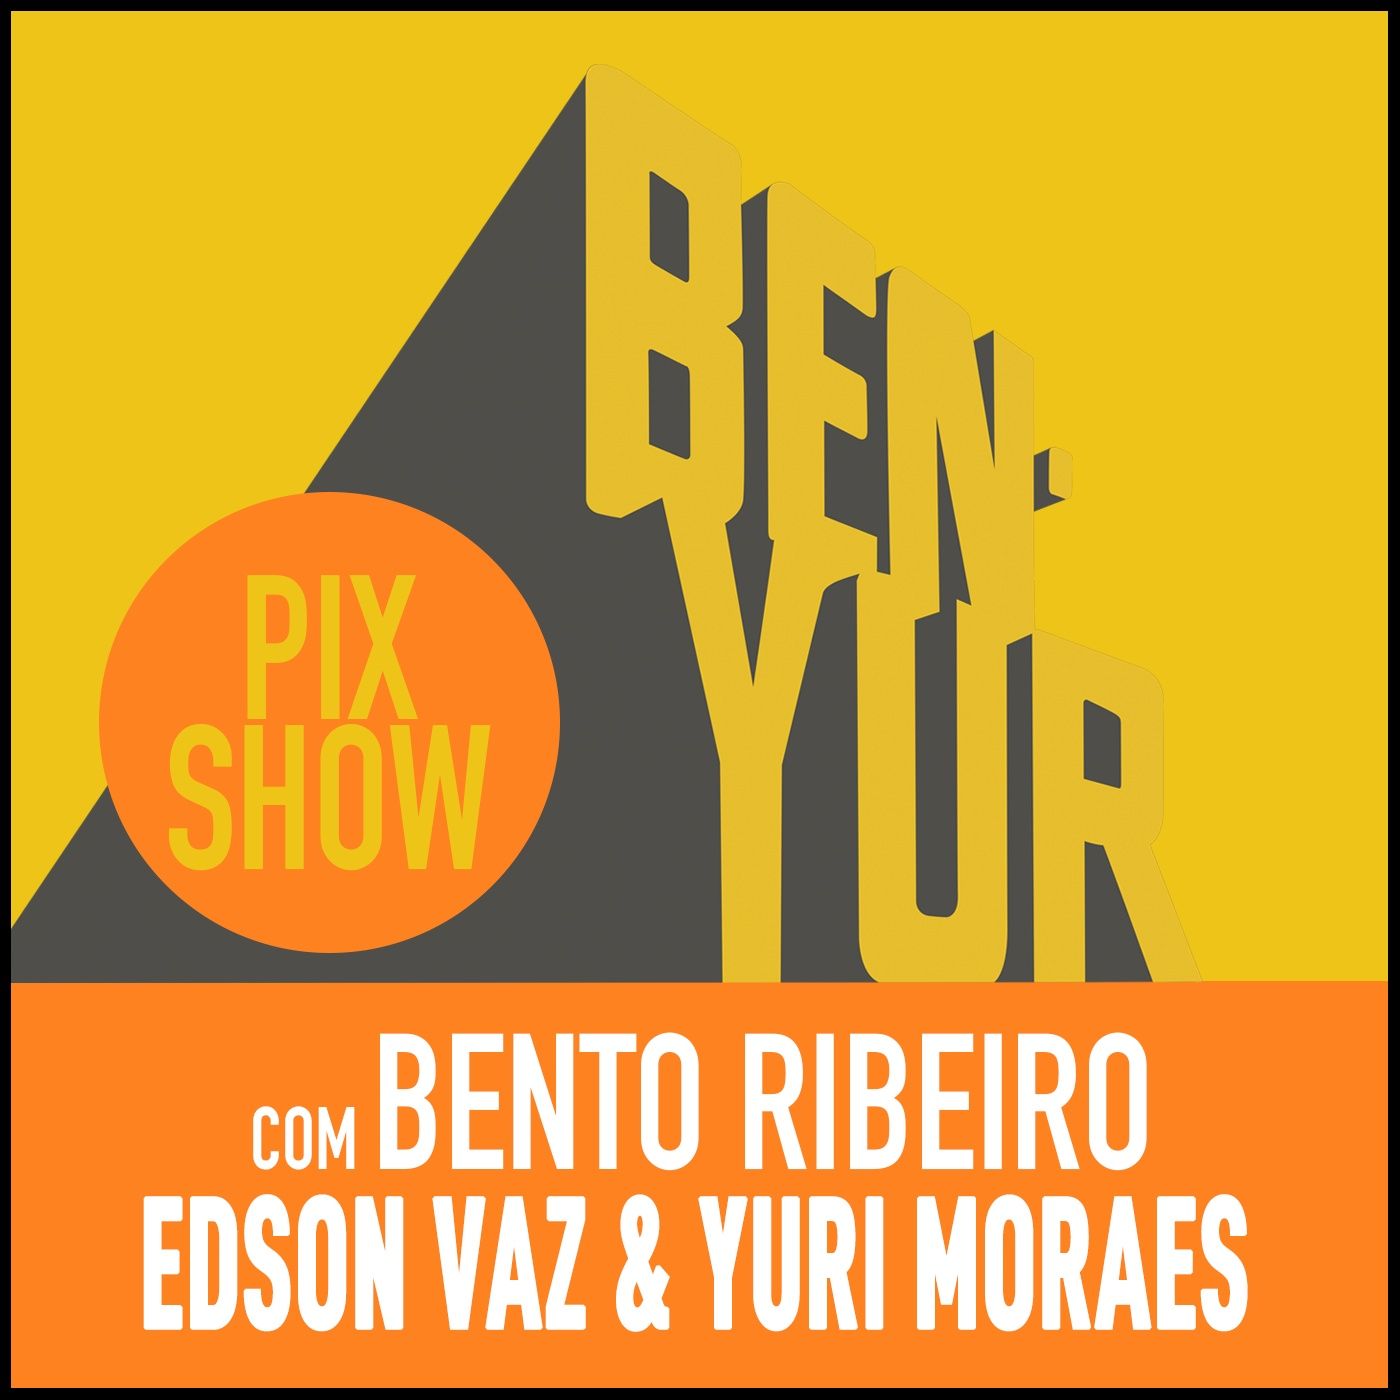 BEN-YUR PIXSHOW #088 com Bento Ribeiro, Edson Vaz & Yuri Moraes